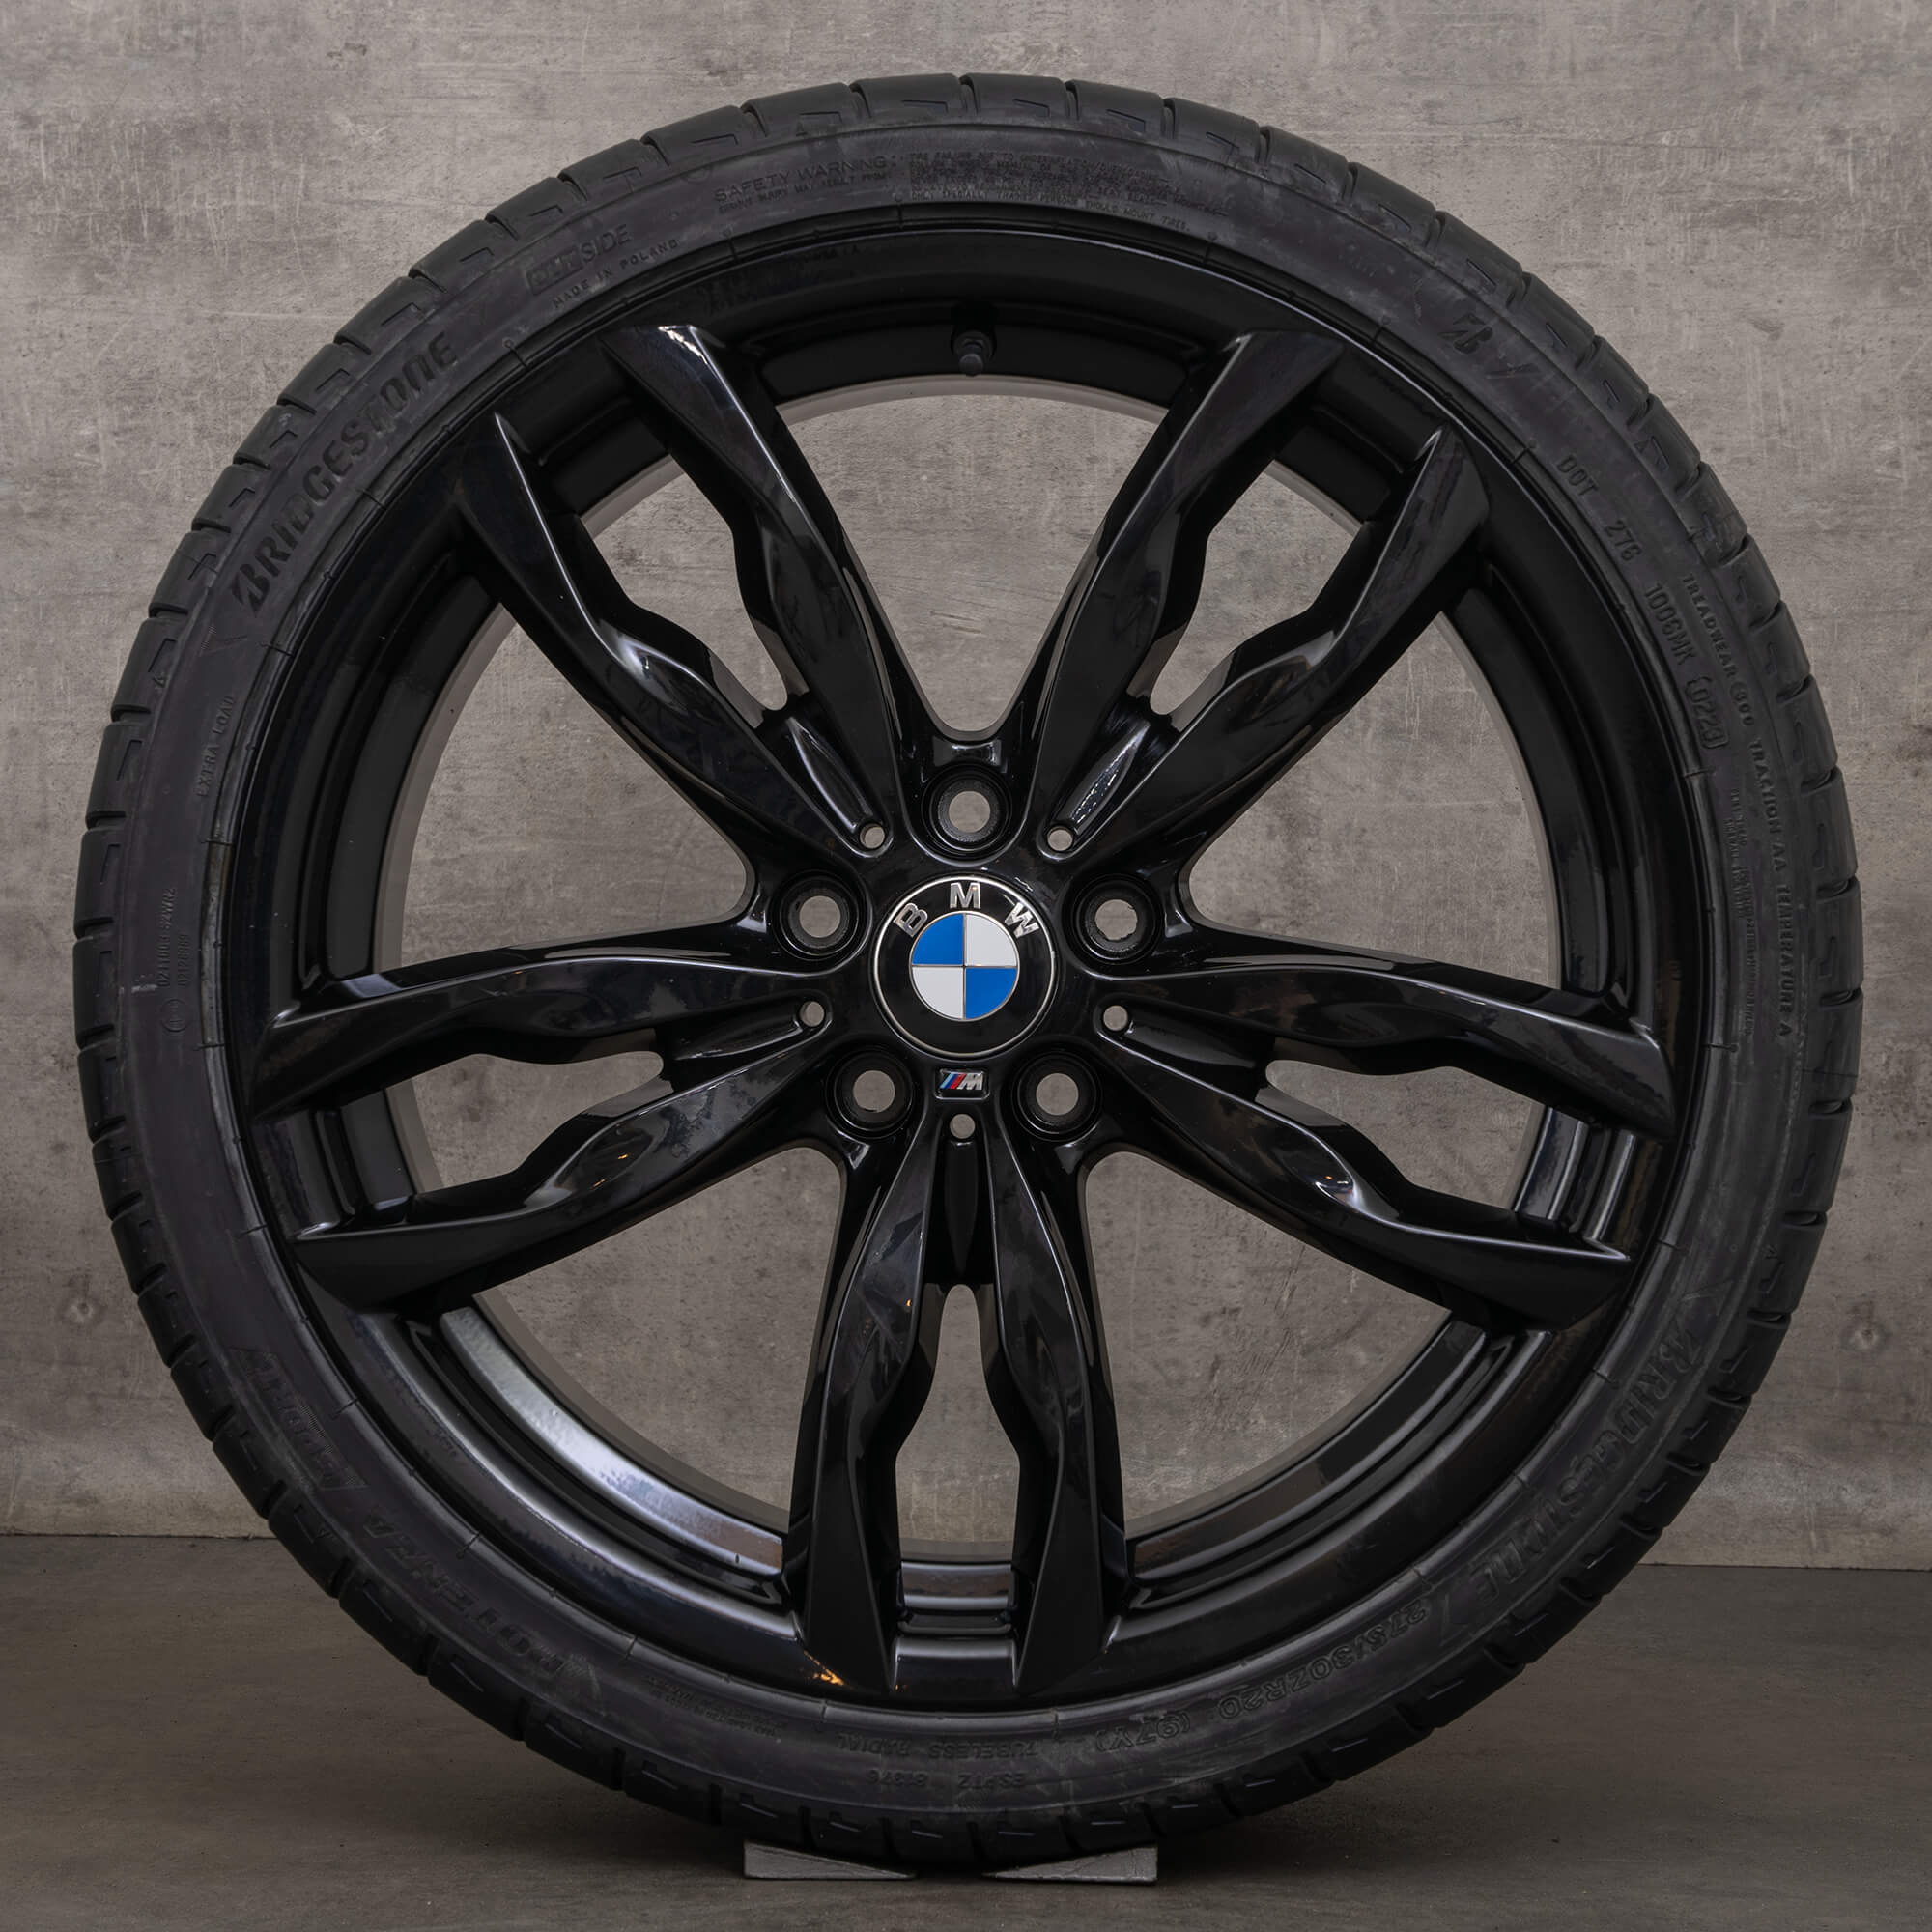 OEM BMW 5 Series F10 F11 6 F12 F13 F06 20 inch rims summer tires styling 434 M